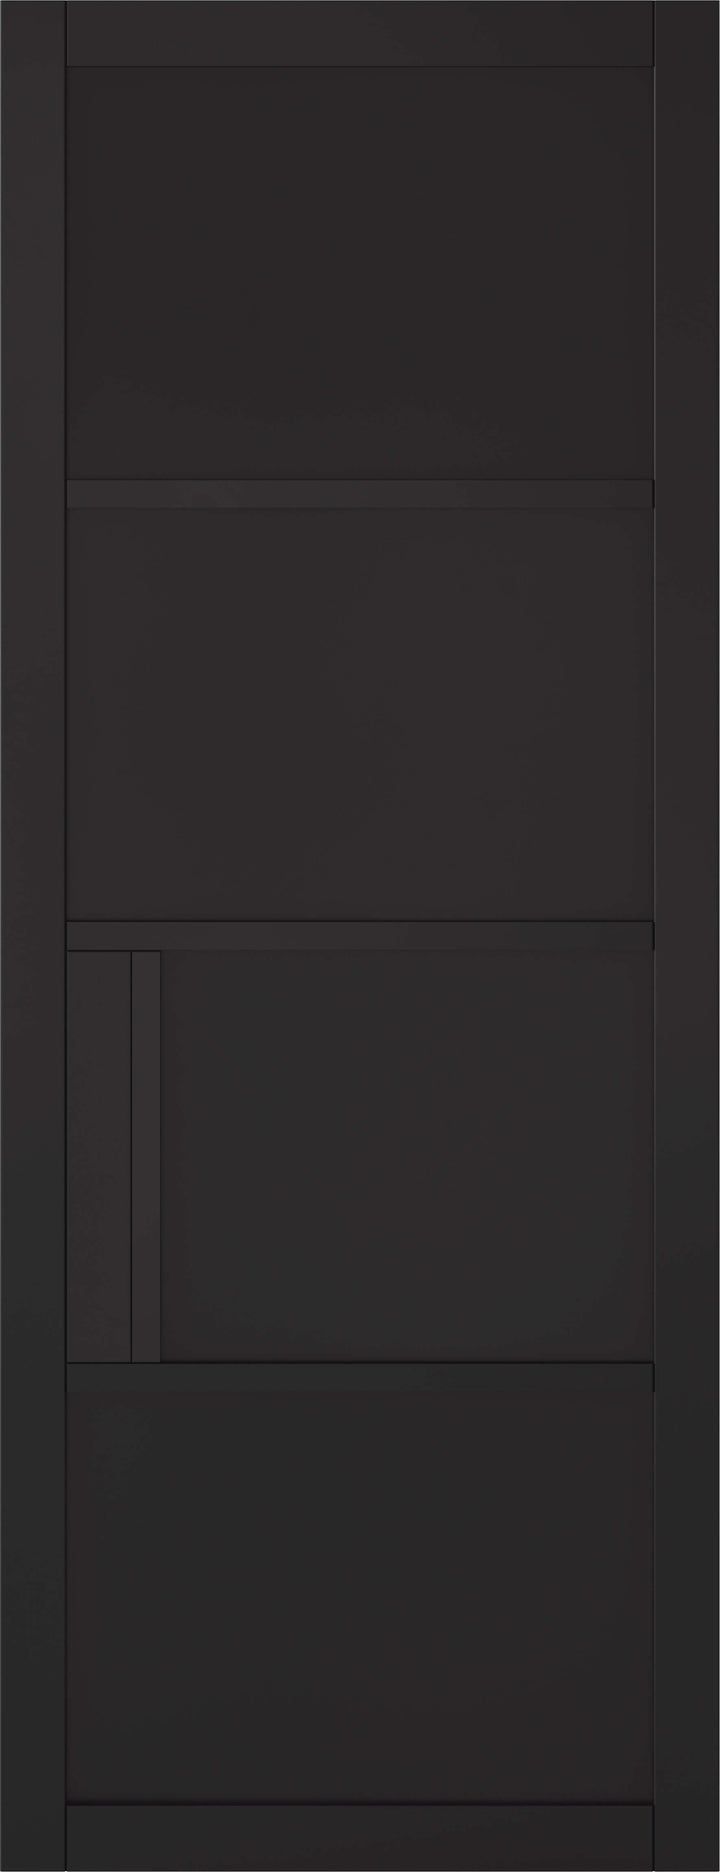 Black Chelsea 4 Panel Pocket Door System